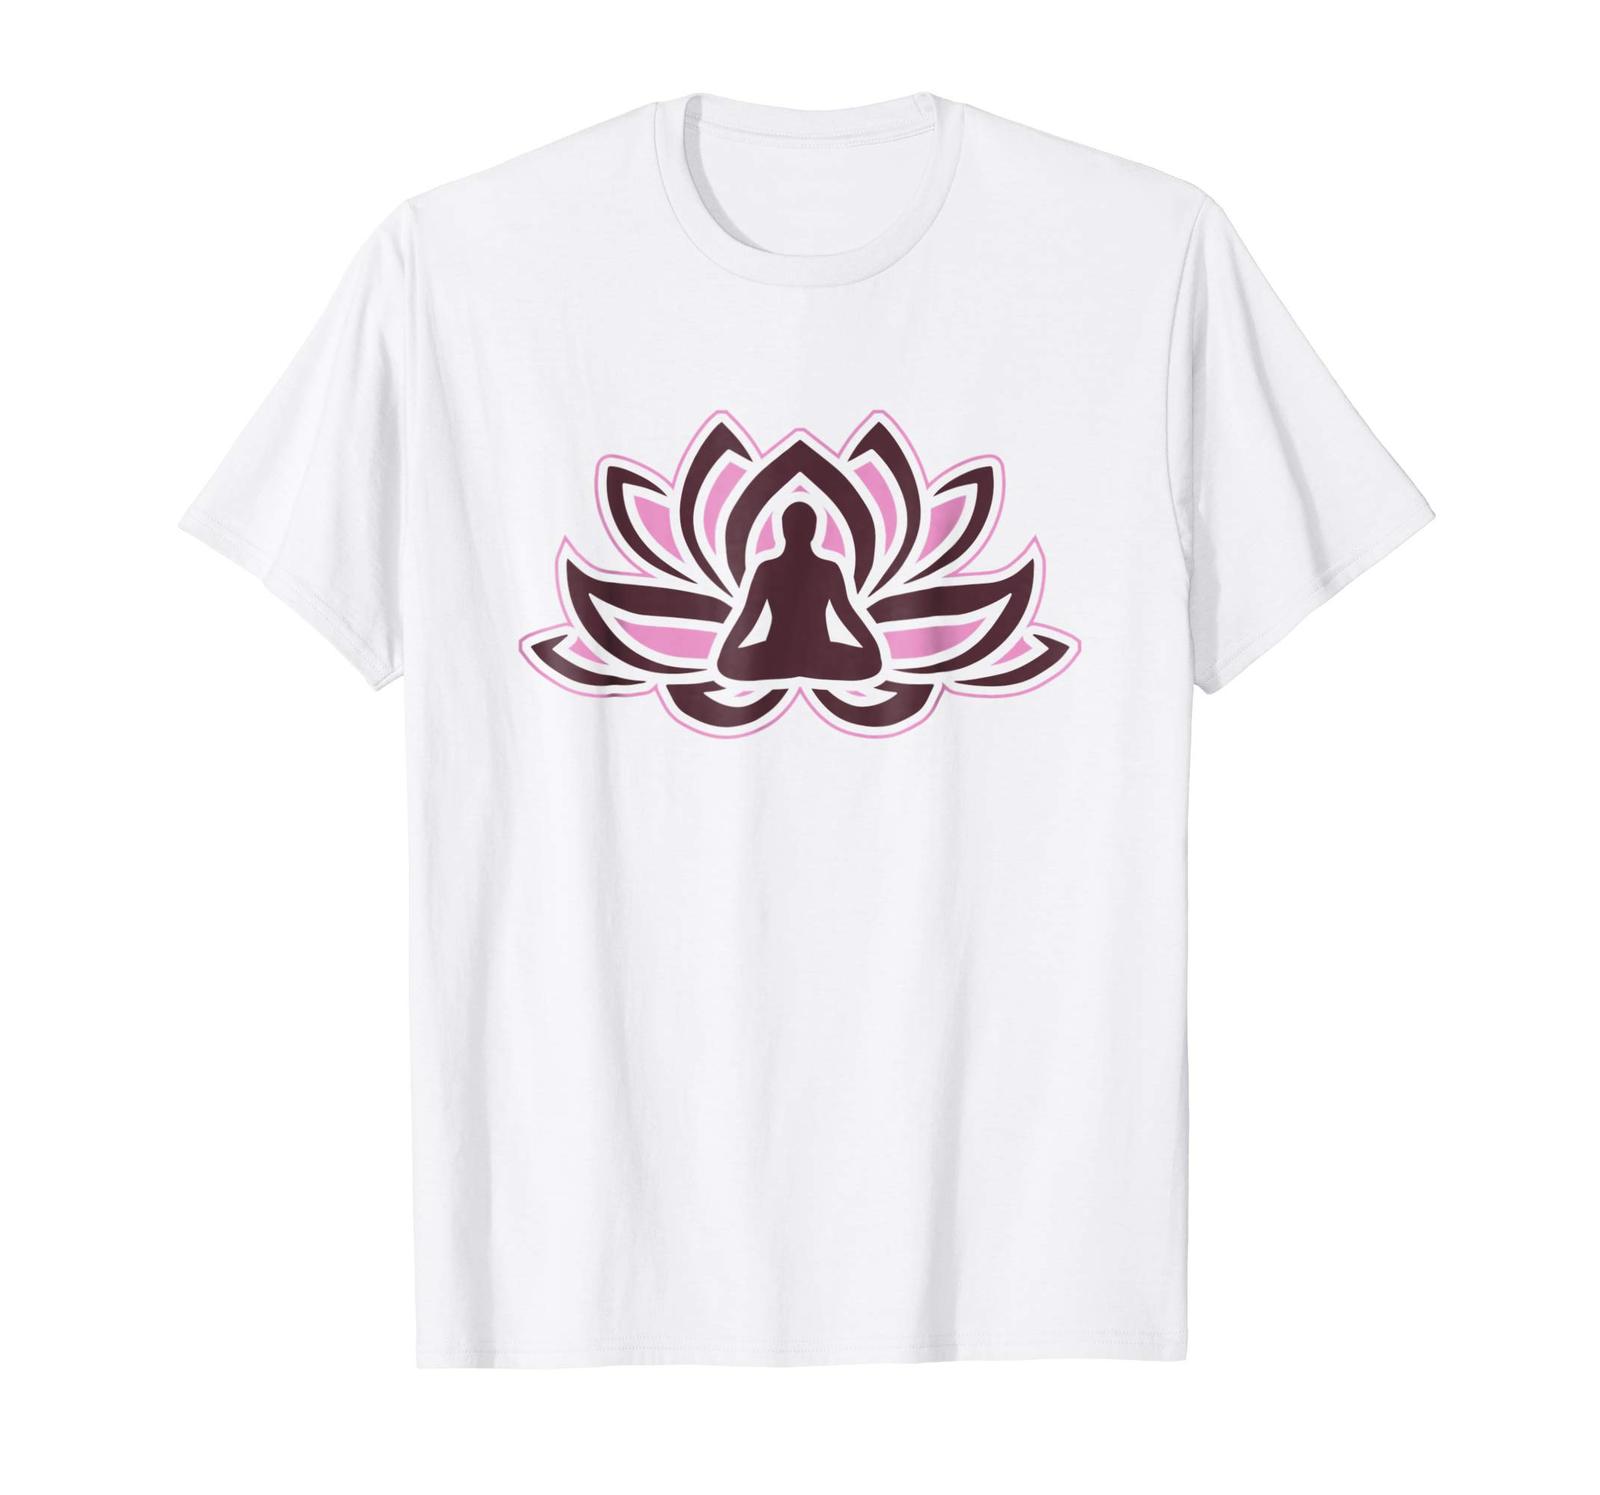 Tee shirts - Funny Meditation Shirt Meditate Lotus Yoga Lover Gifts Men ...